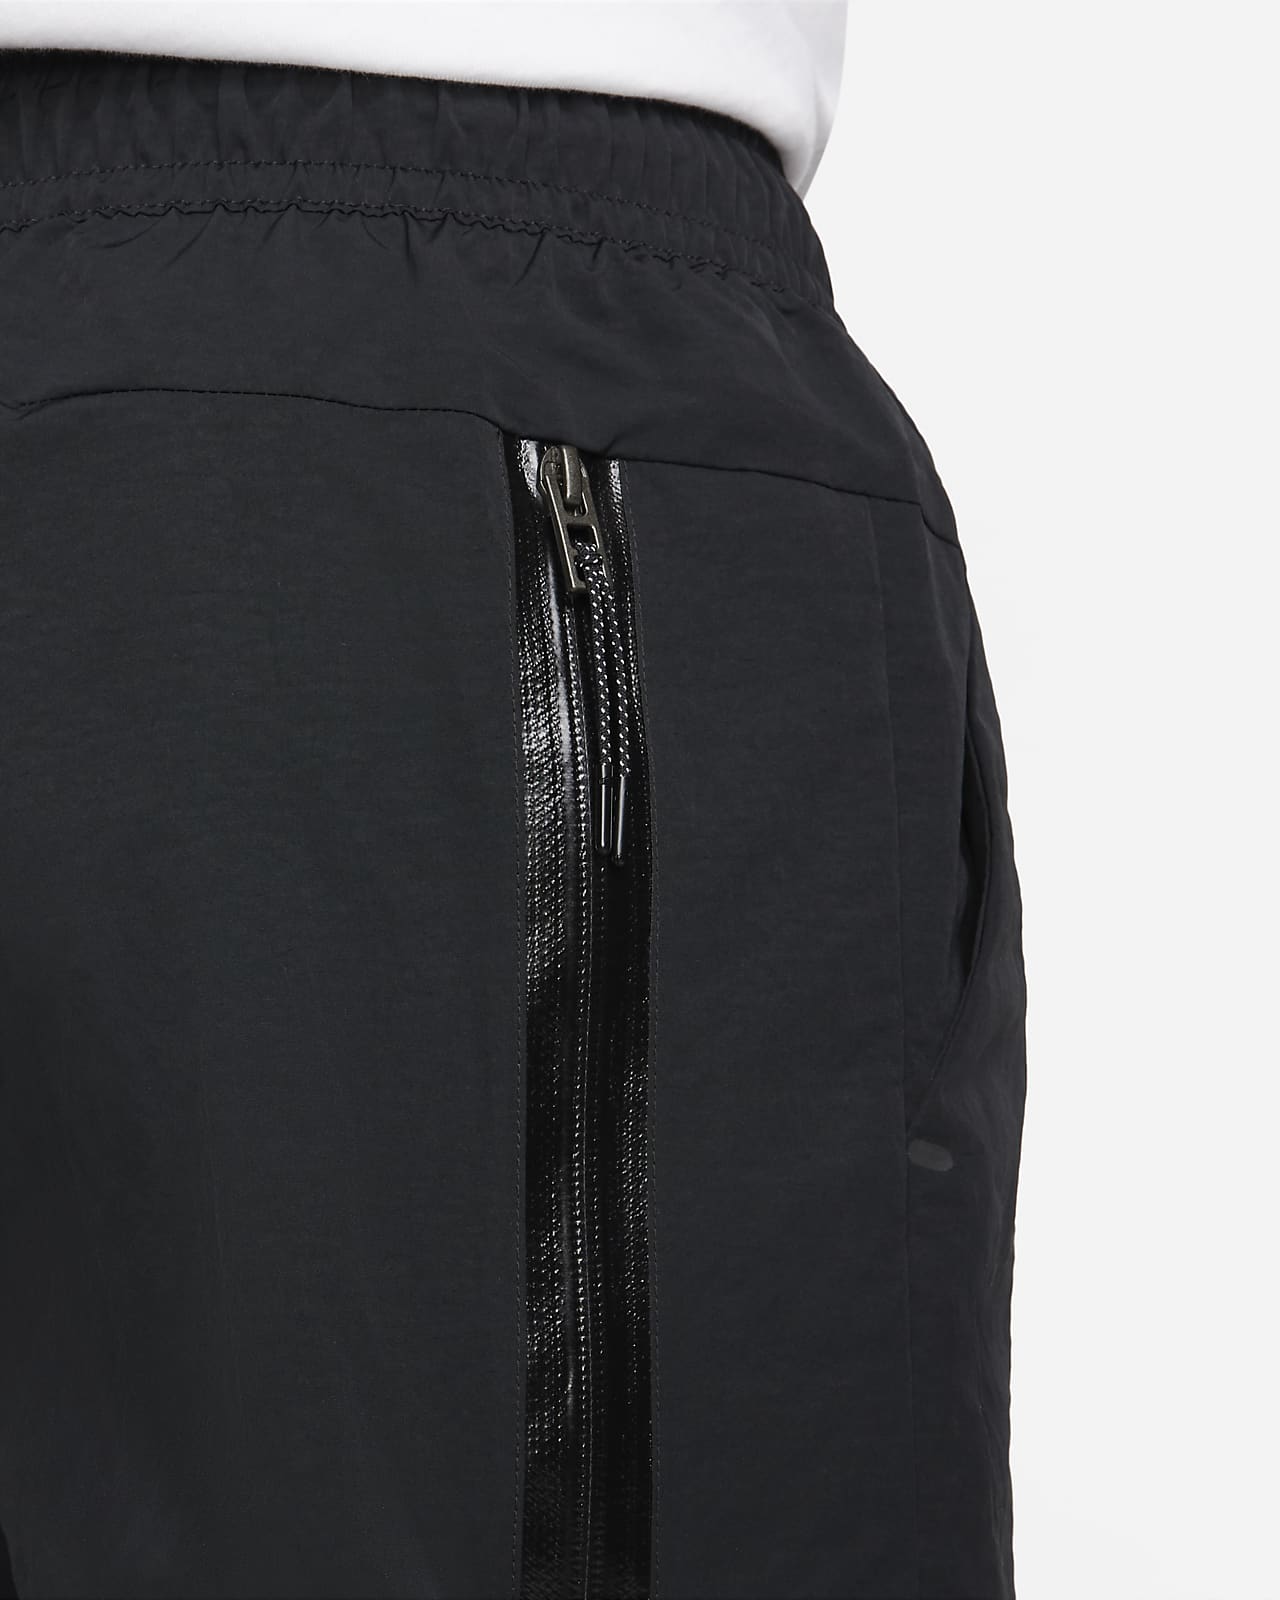 inval parlement Corporation Nike Sportswear Tech Essentials Men's lined Commuter Pants. Nike.com